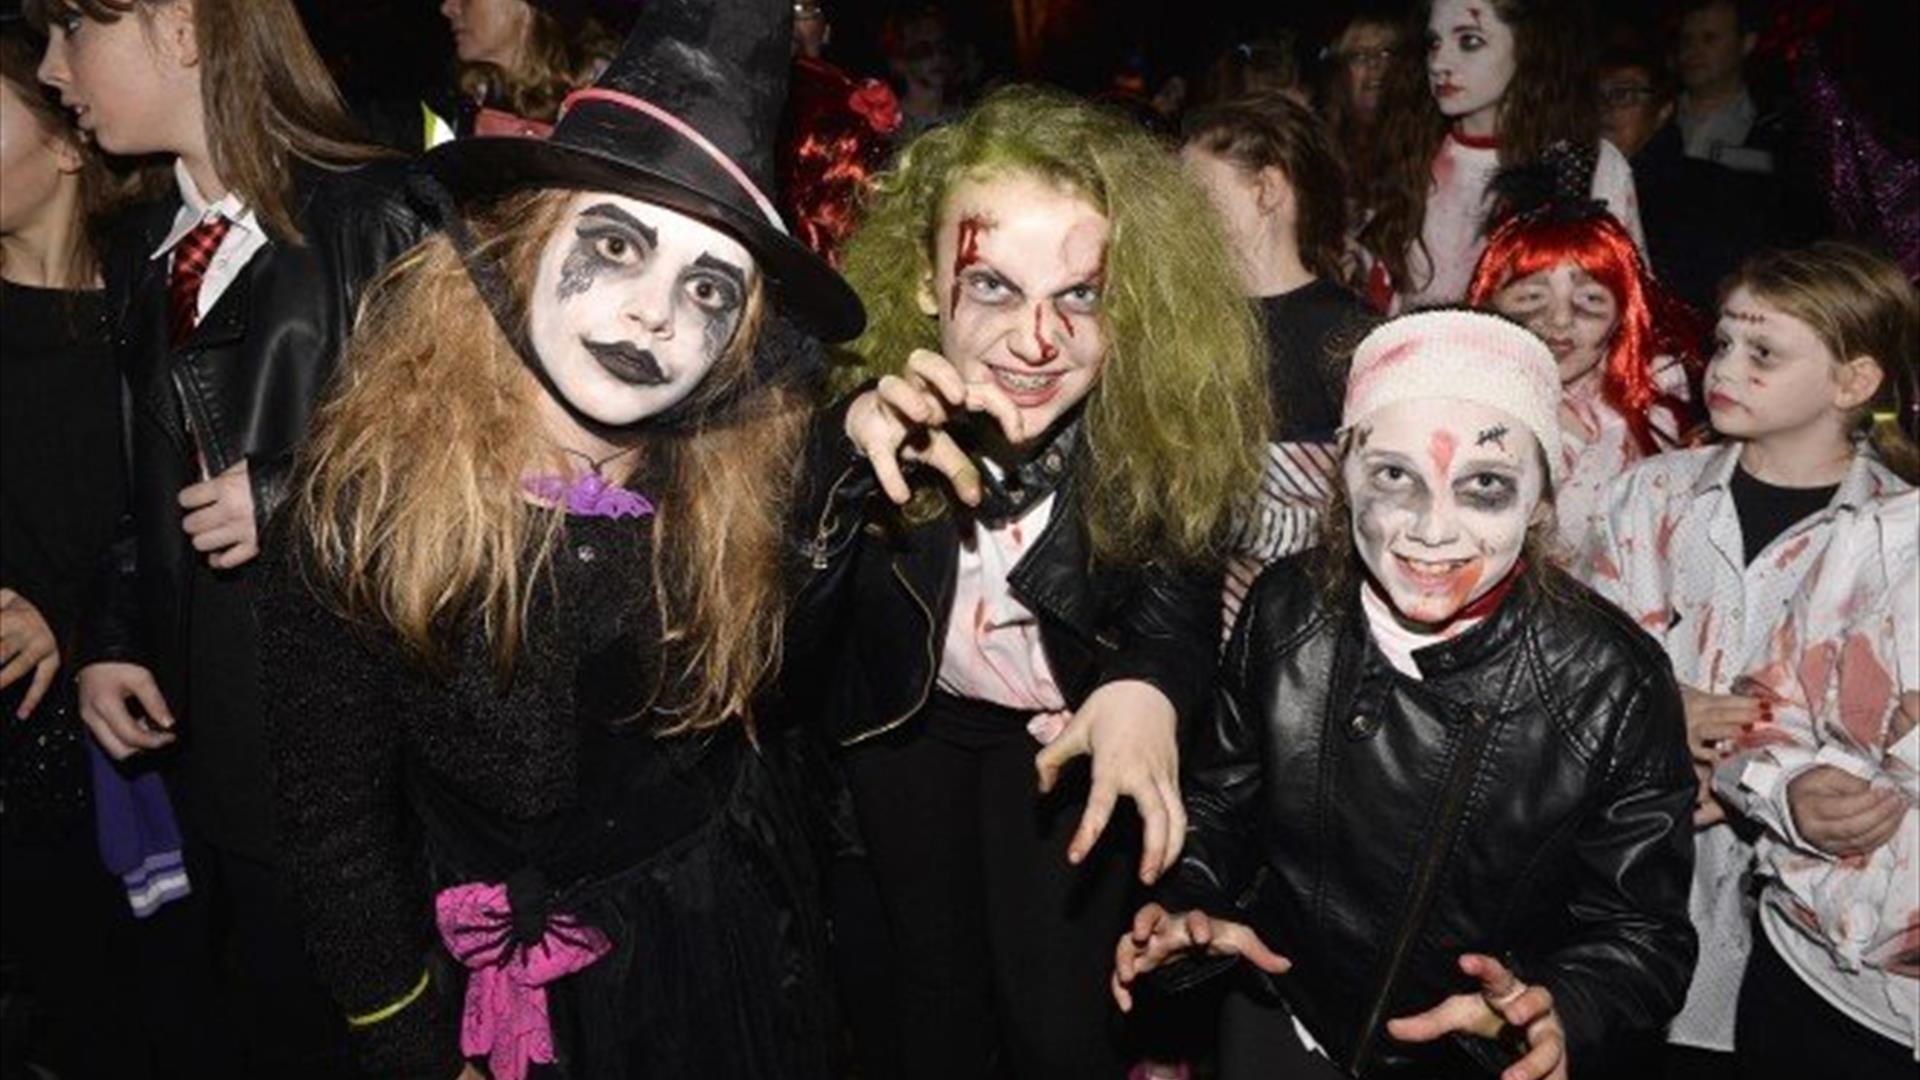 Image shows children dressed up for Halloween celebrations